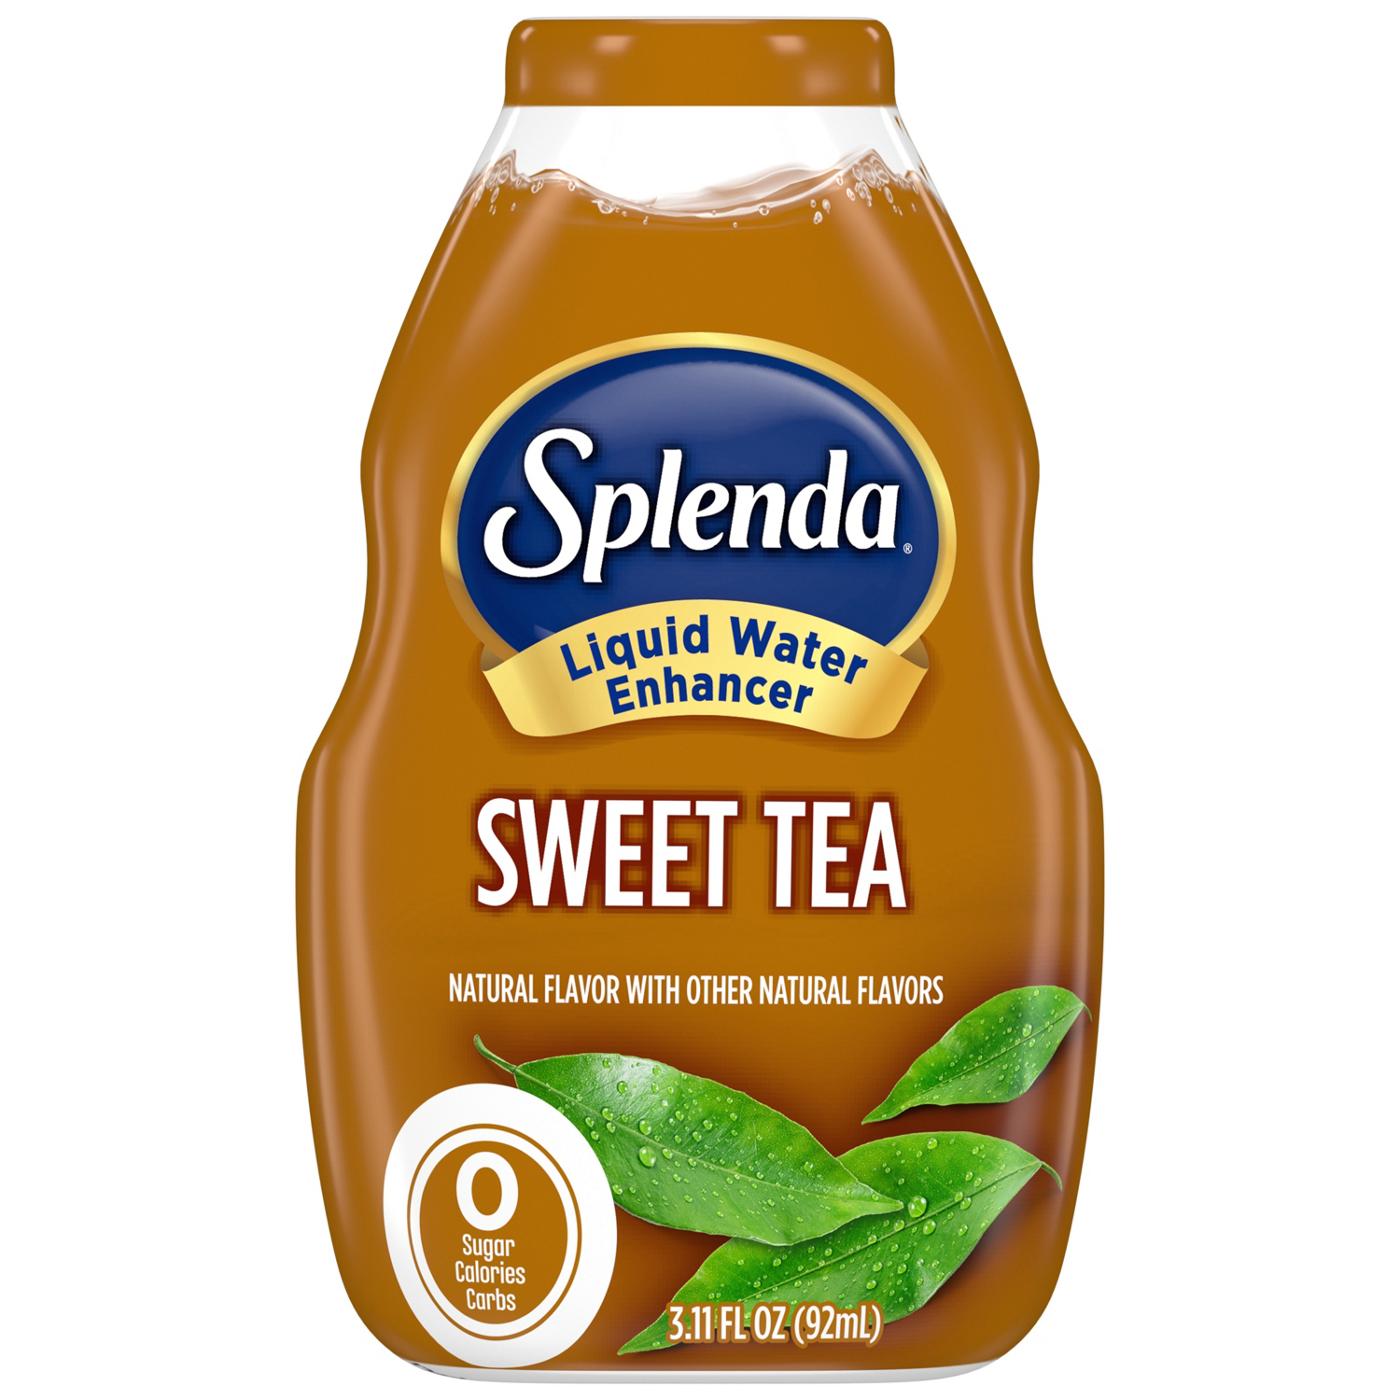 Splenda Liquid Water Enhancer - Sweet Tea; image 1 of 2